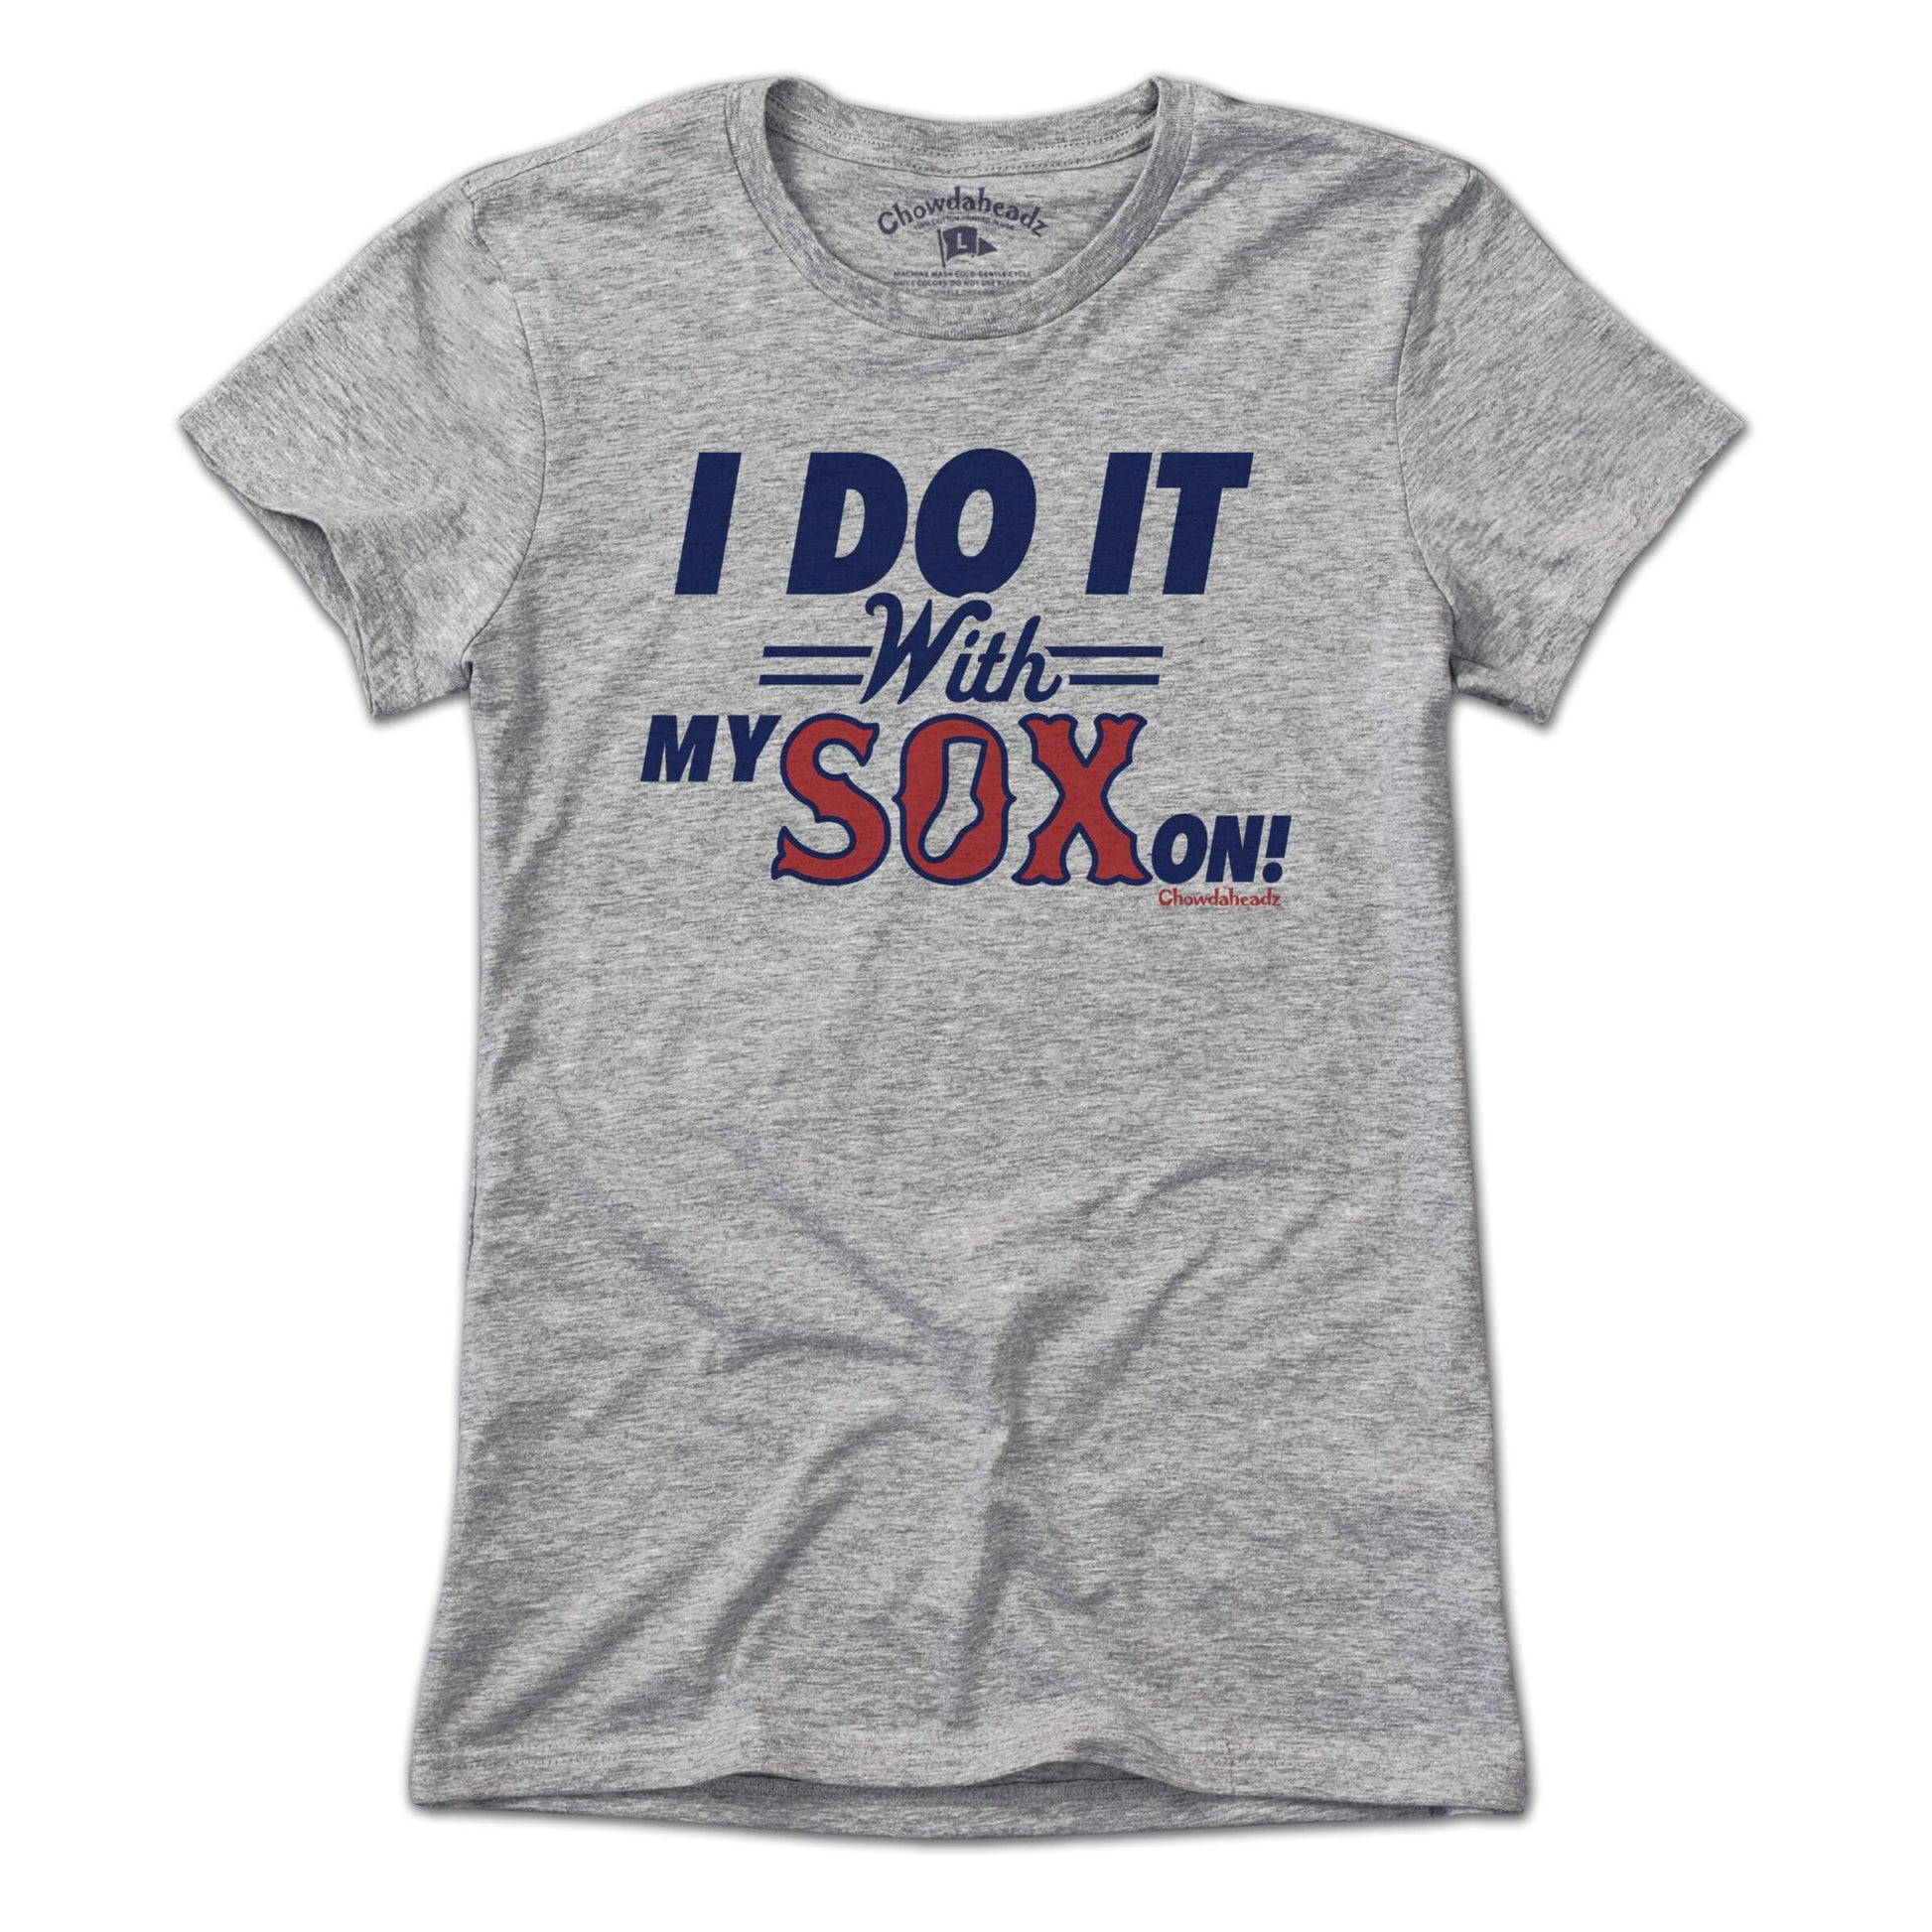 I Do It With My Sox On T-Shirt - Chowdaheadz